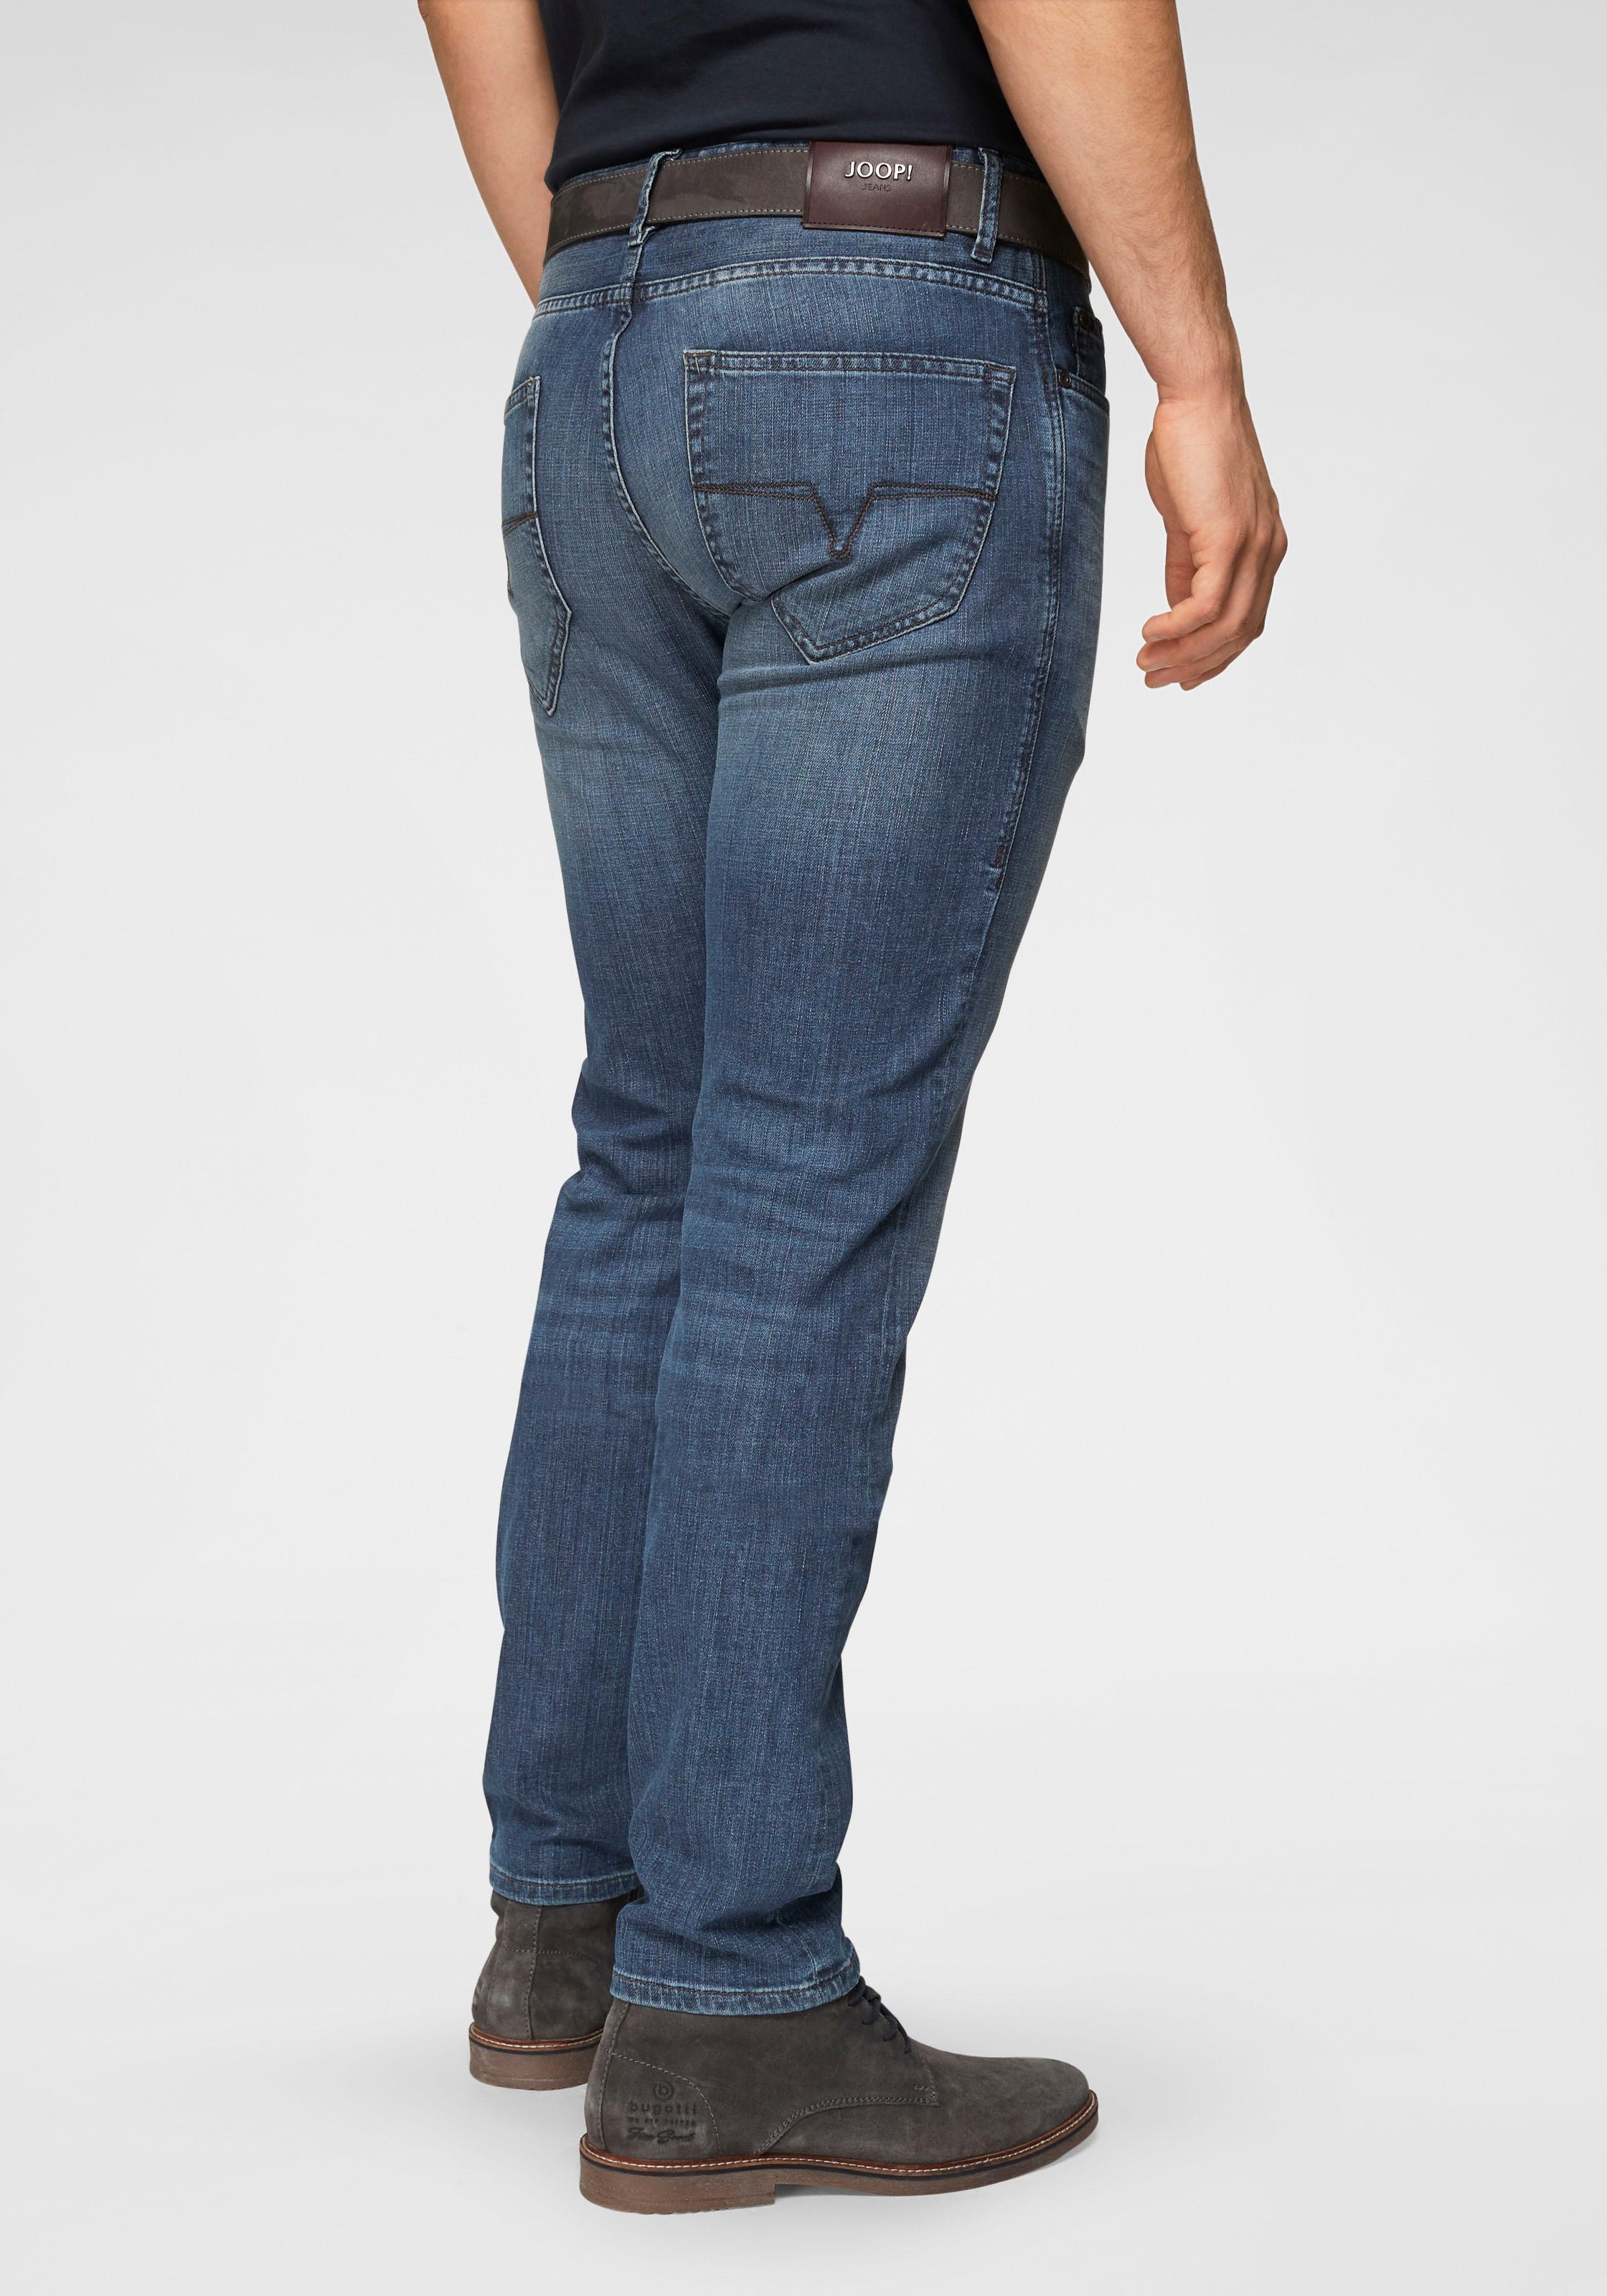 joop jeans mitch modern fit